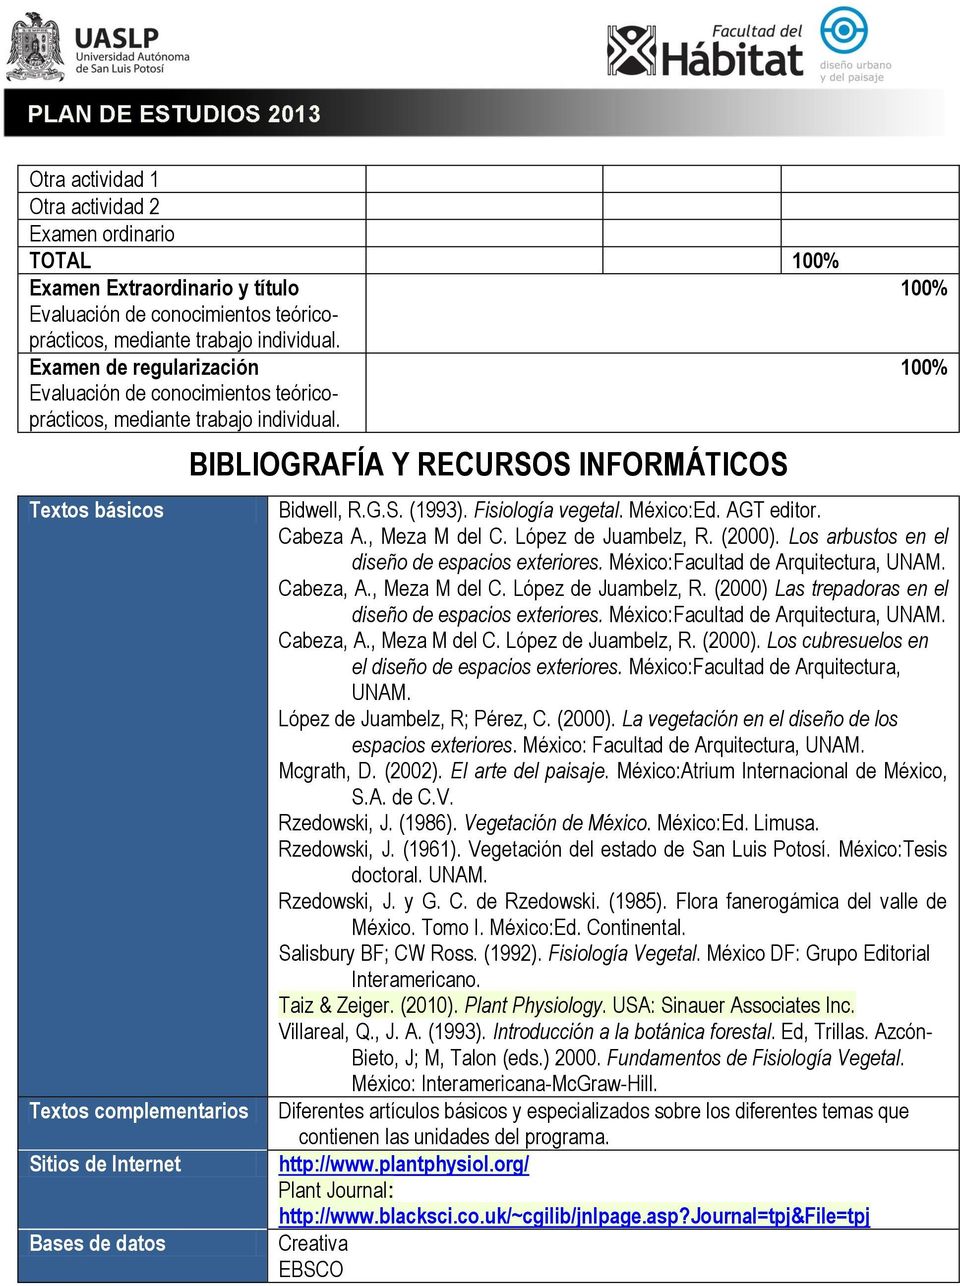 Textos básicos Textos complementarios Sitios de Internet Bases de datos BIBLIOGRAFÍA Y RECURSOS INFORMÁTICOS 100% 100% Bidwell, R.G.S. (1993). Fisiología vegetal. México:Ed. AGT editor. Cabeza A.